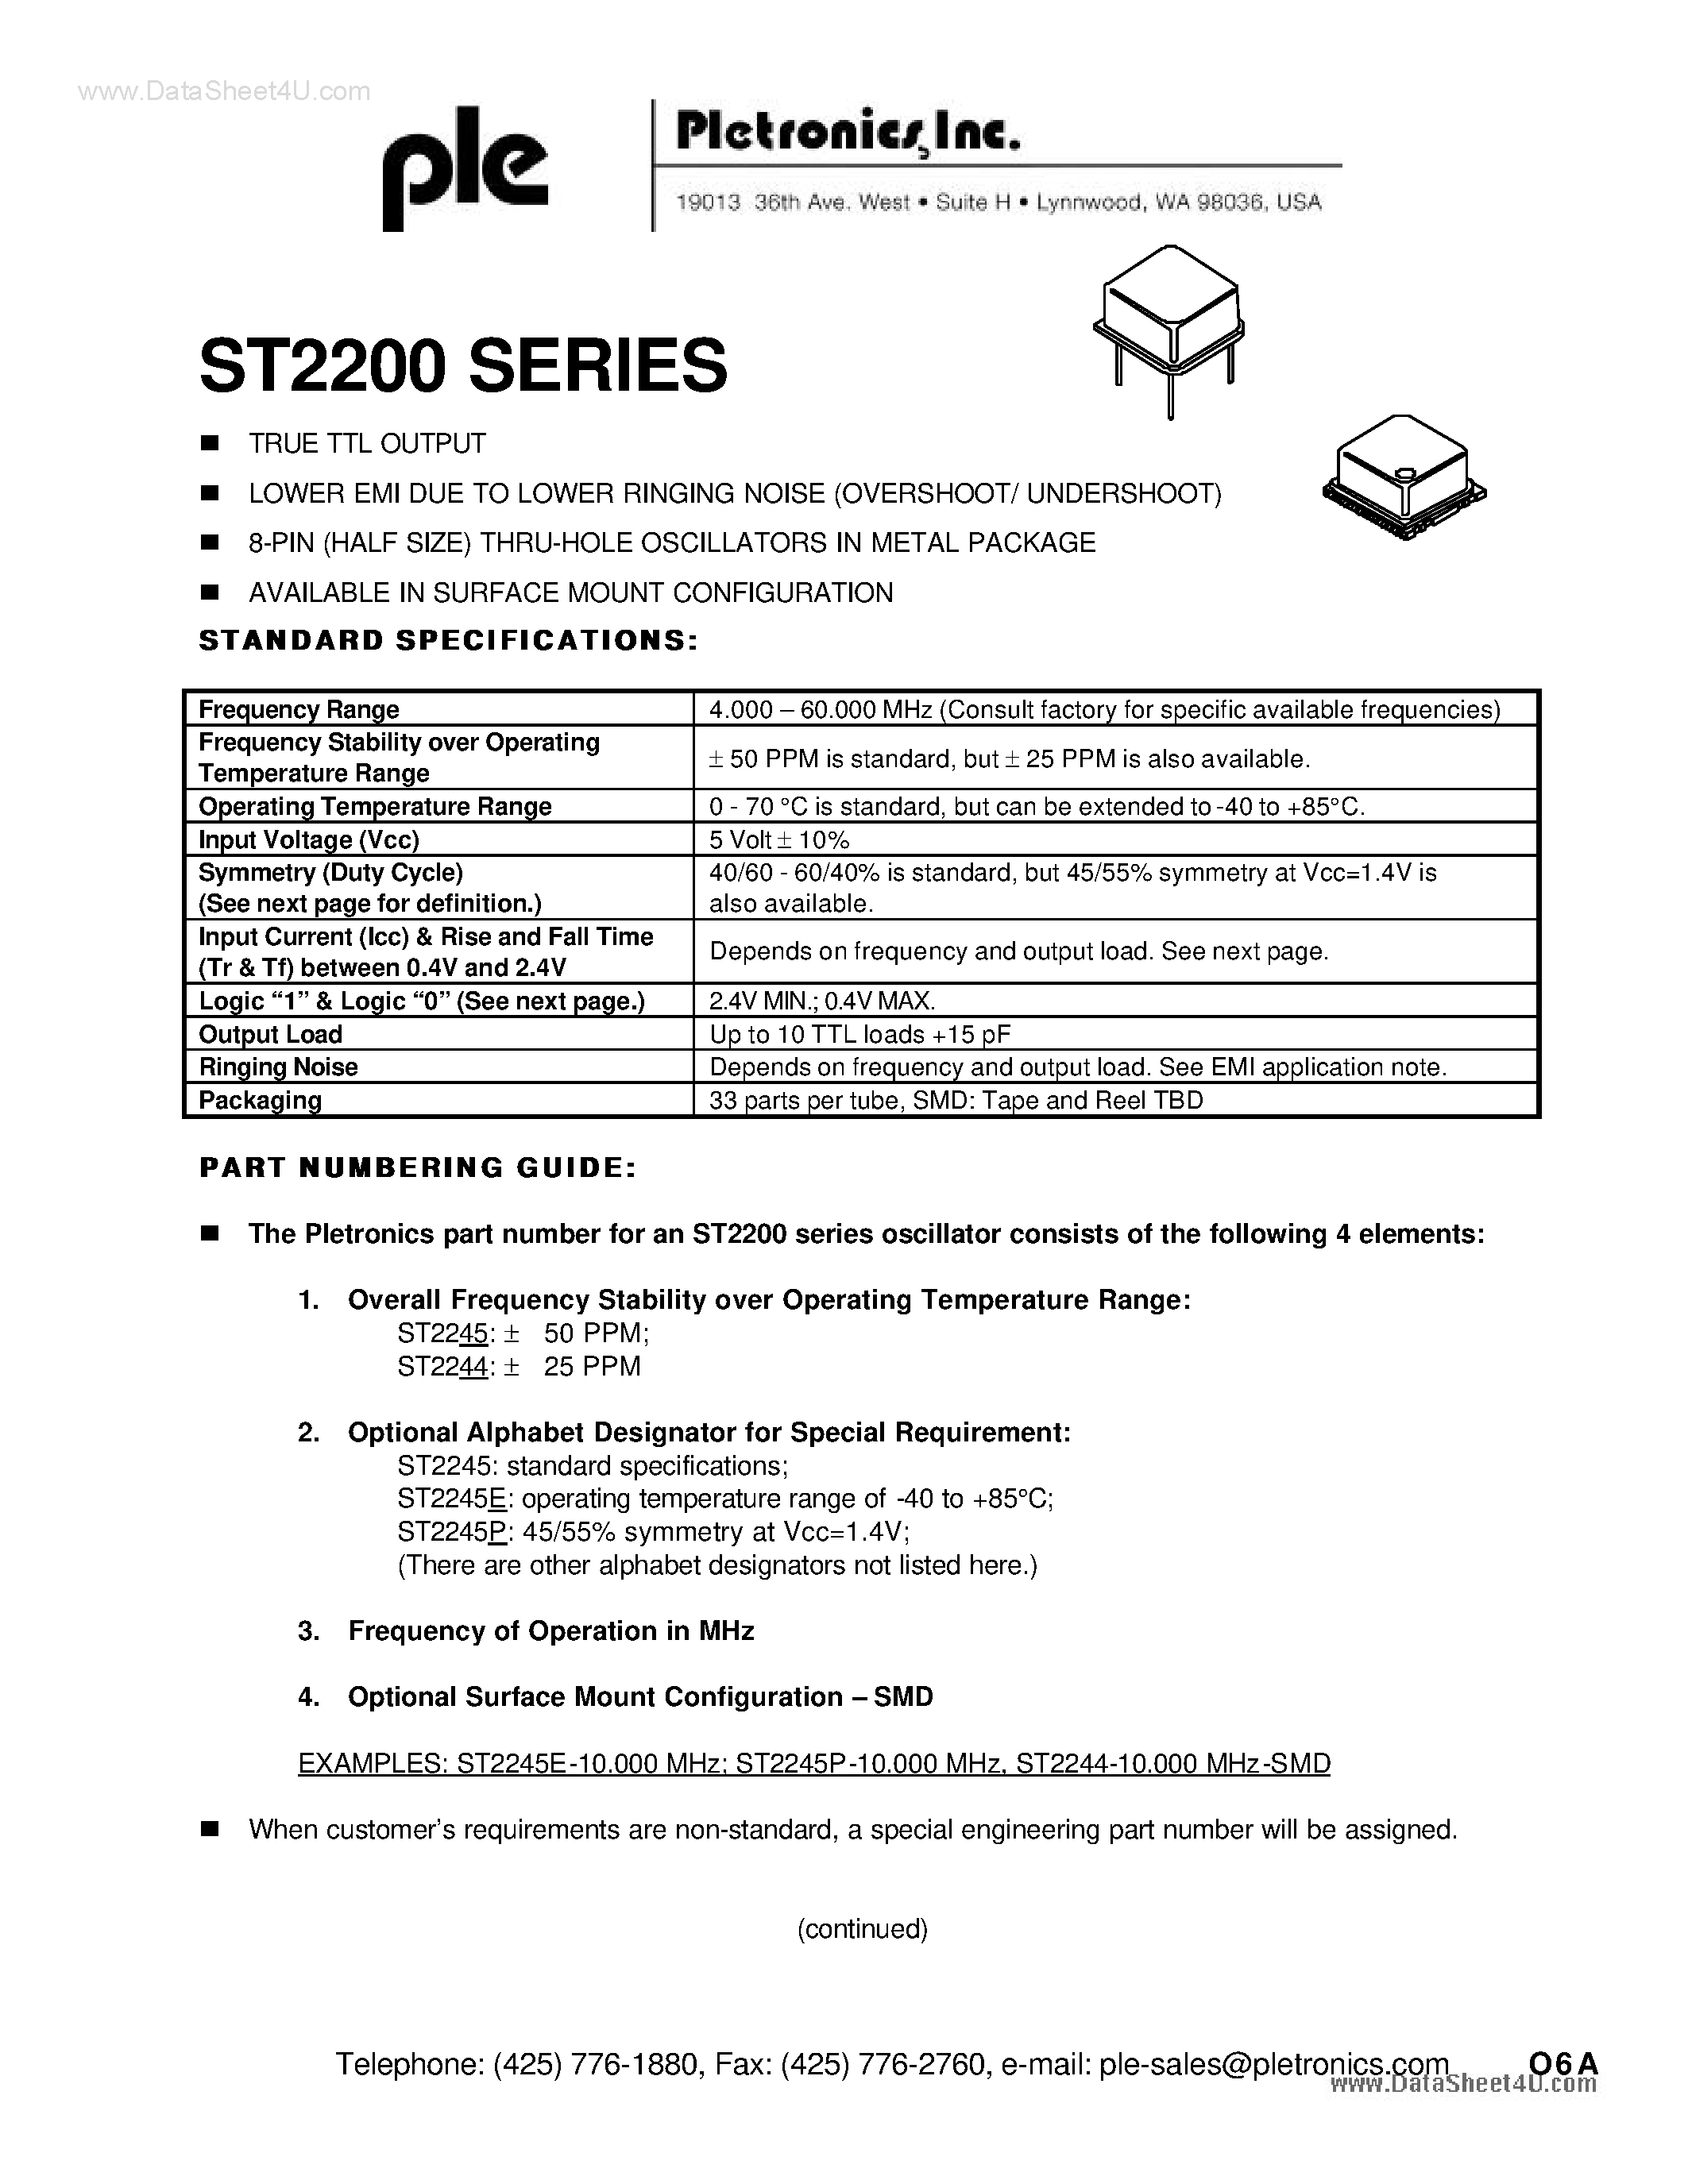 Даташит ST2244 - (ST2244 / ST2245) ST2000 Series Crystal Oscillator страница 1